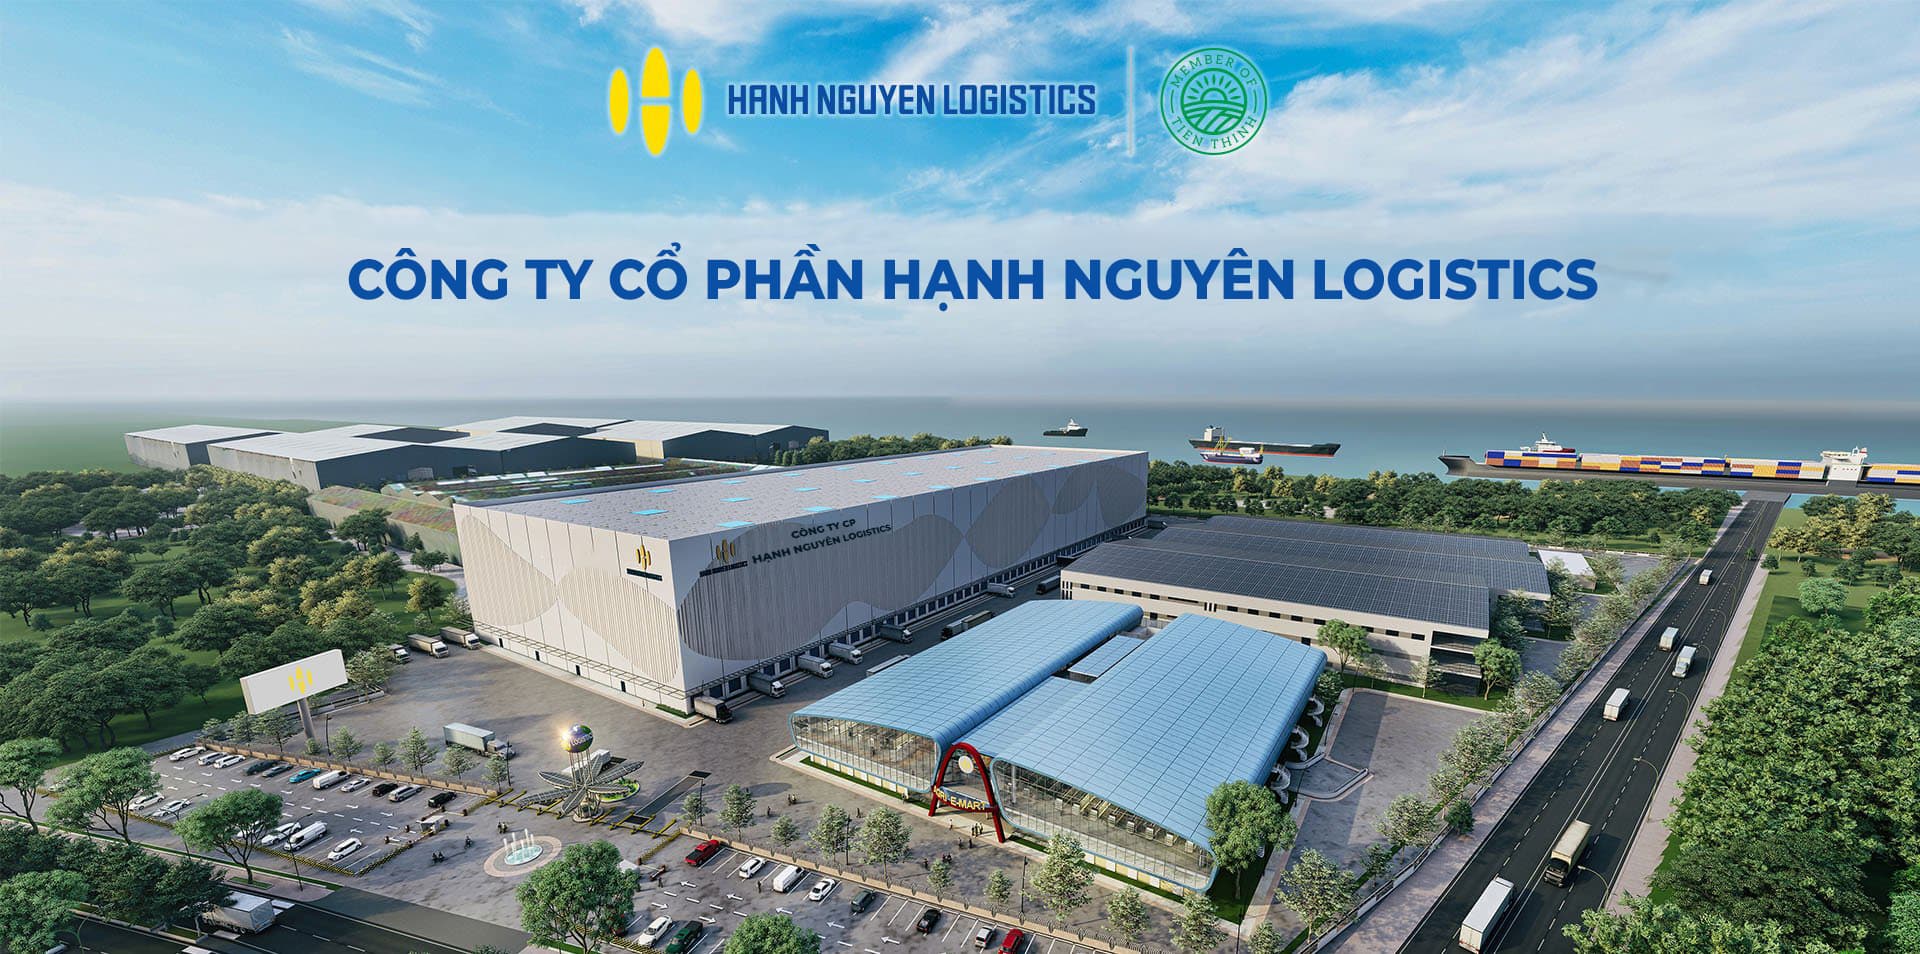 Hanh Nguyen Logistics Joint Stock Company